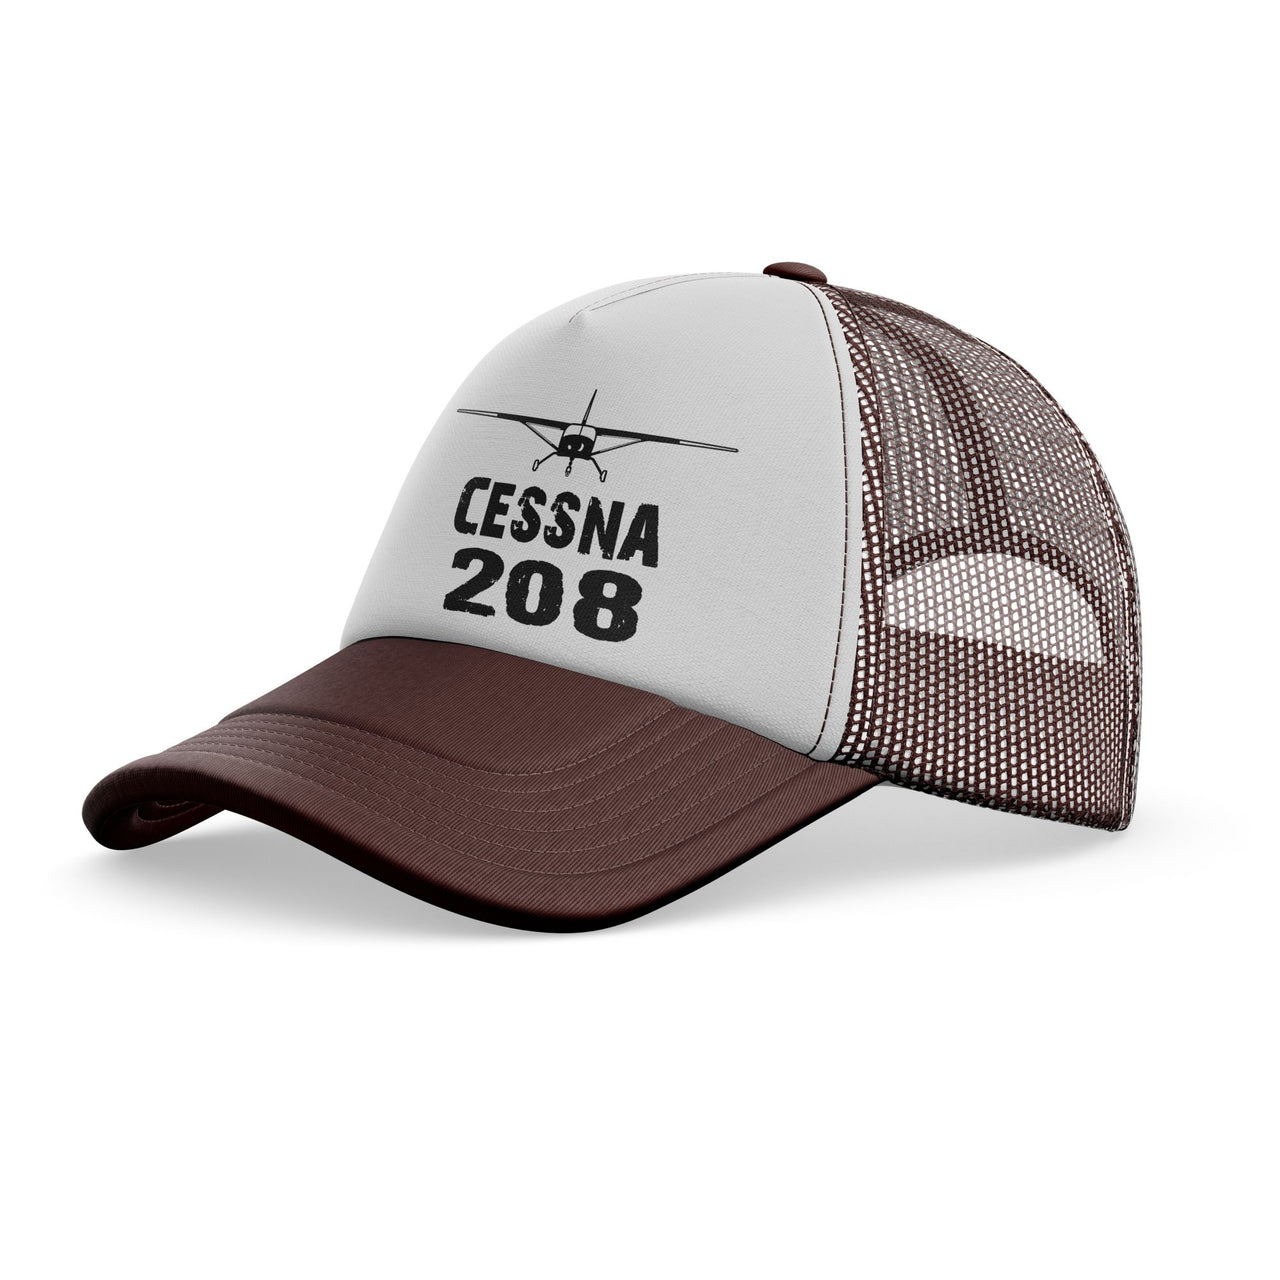 Cessna 208 & Plane Designed Trucker Caps & Hats